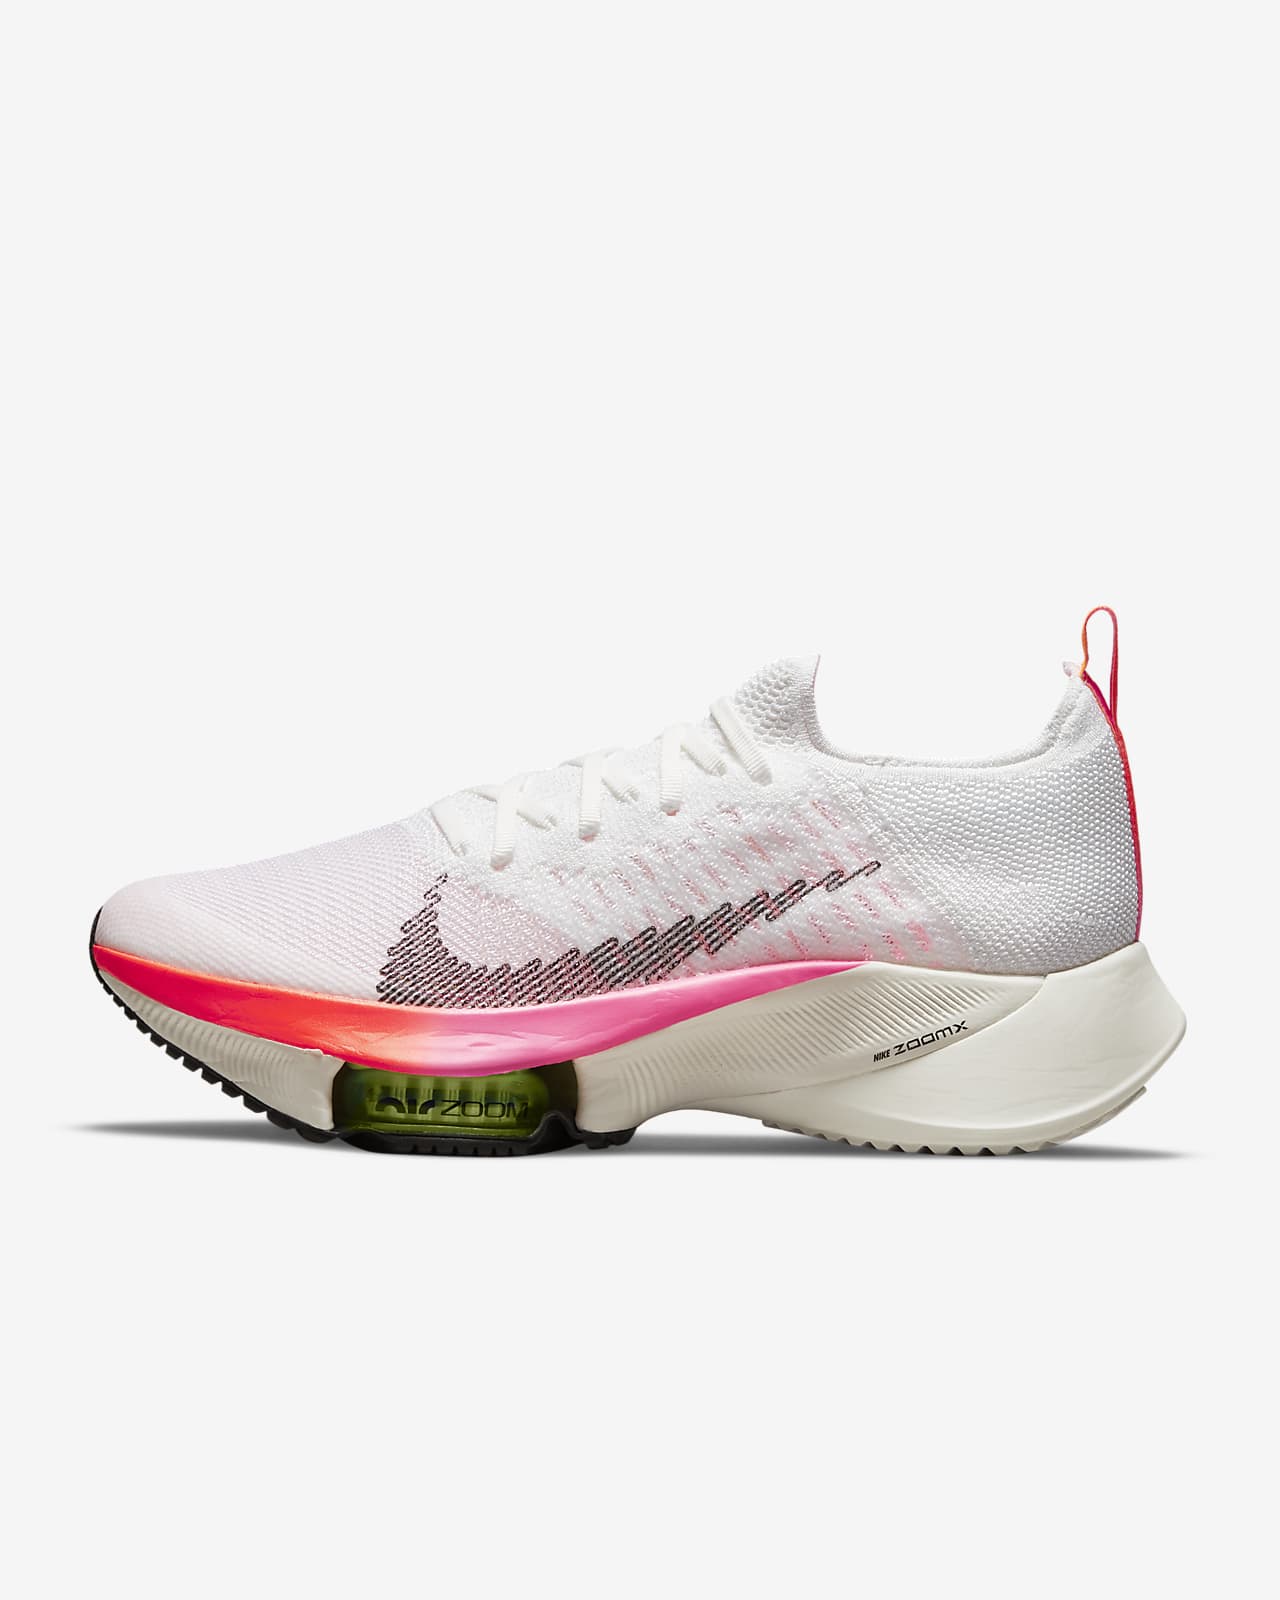 Chaussure de running sur route Nike Air Zoom Tempo NEXT% Flyknit pour Femme